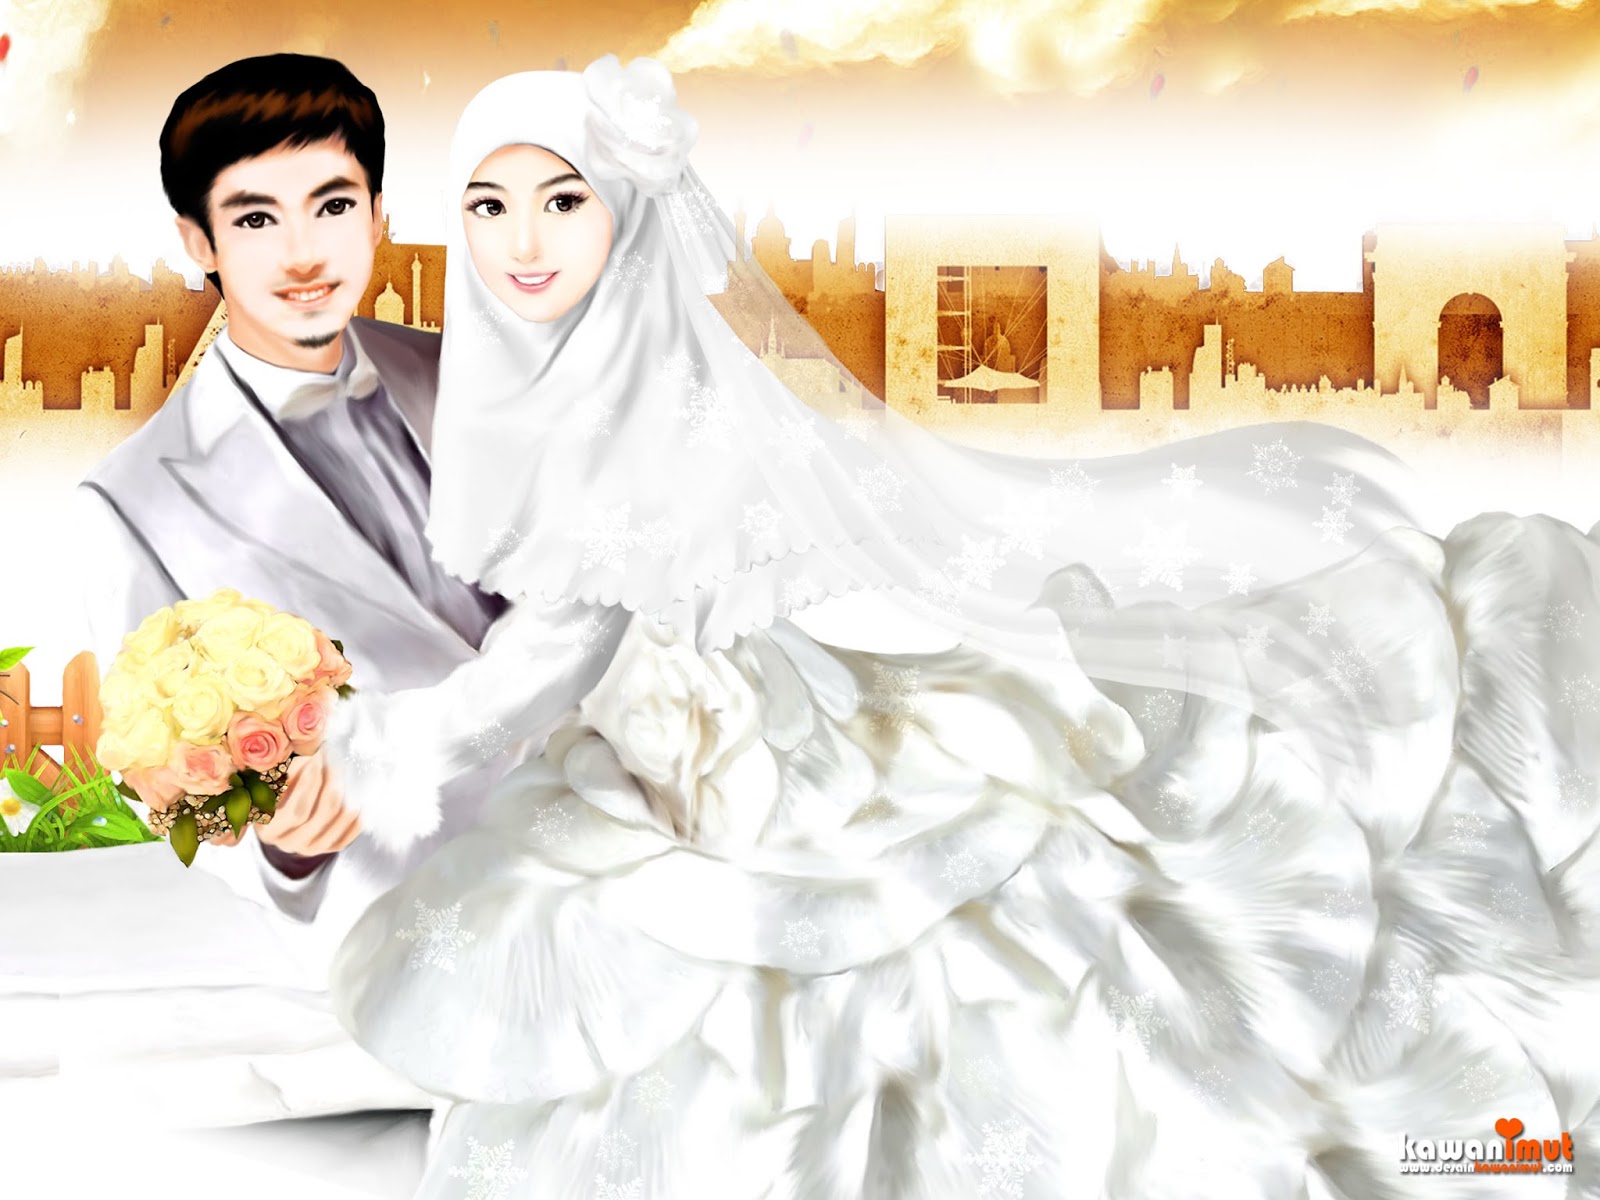 Https Pngtree Com Freepng Wedding Couple Muslim Outline 3993657 Html